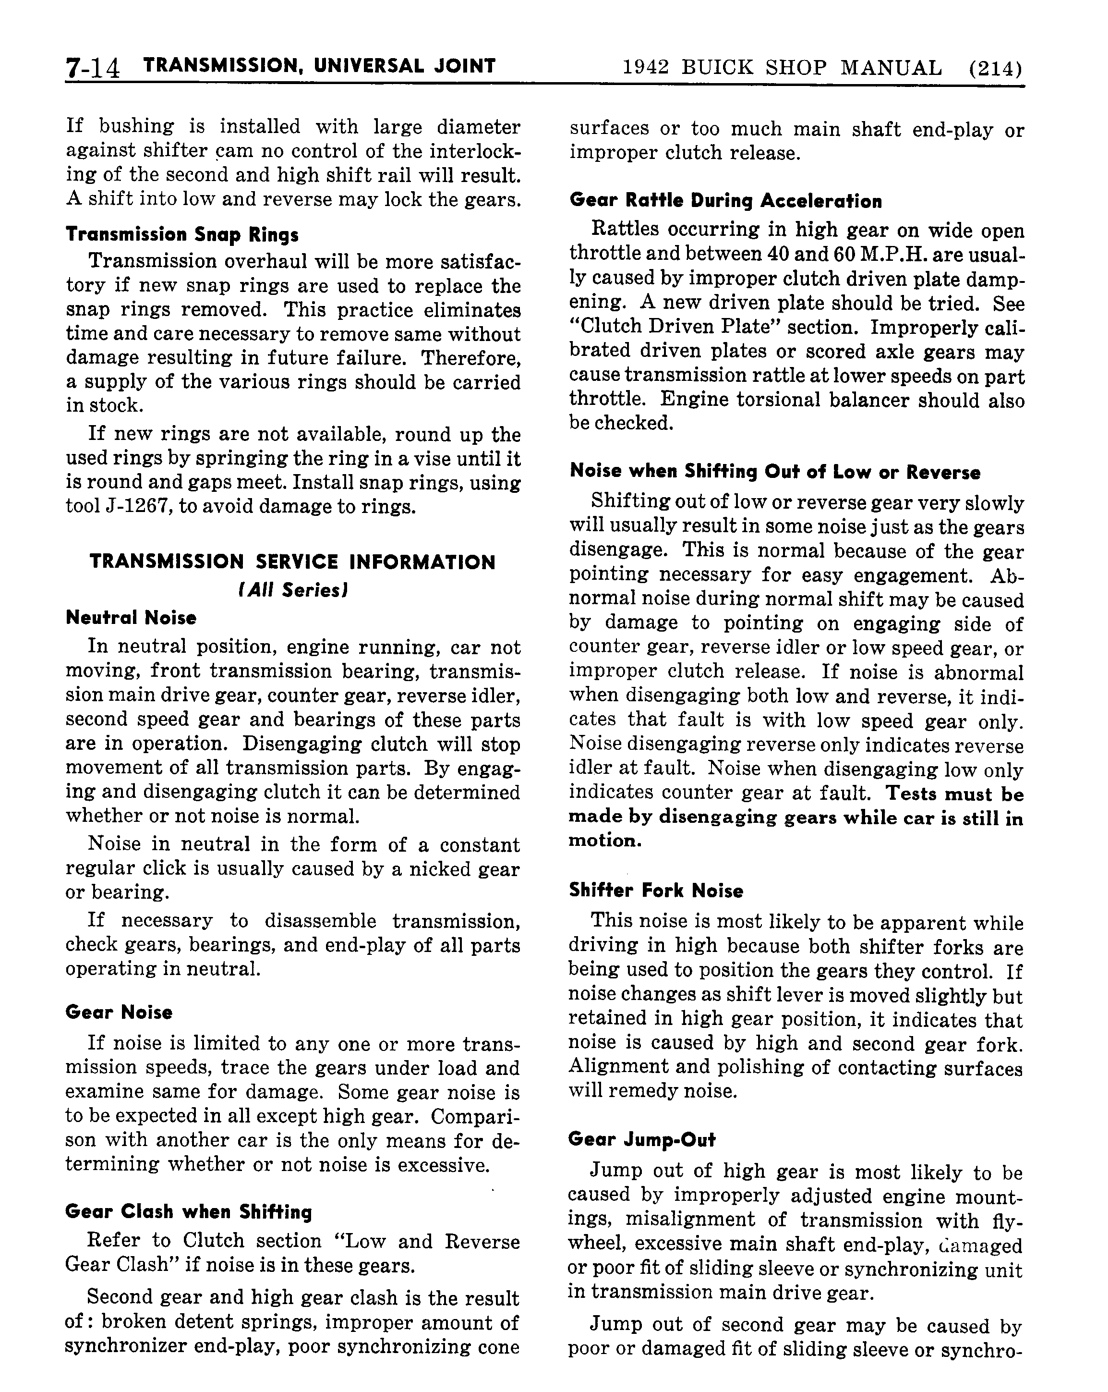 n_08 1942 Buick Shop Manual - Transmission-014-014.jpg